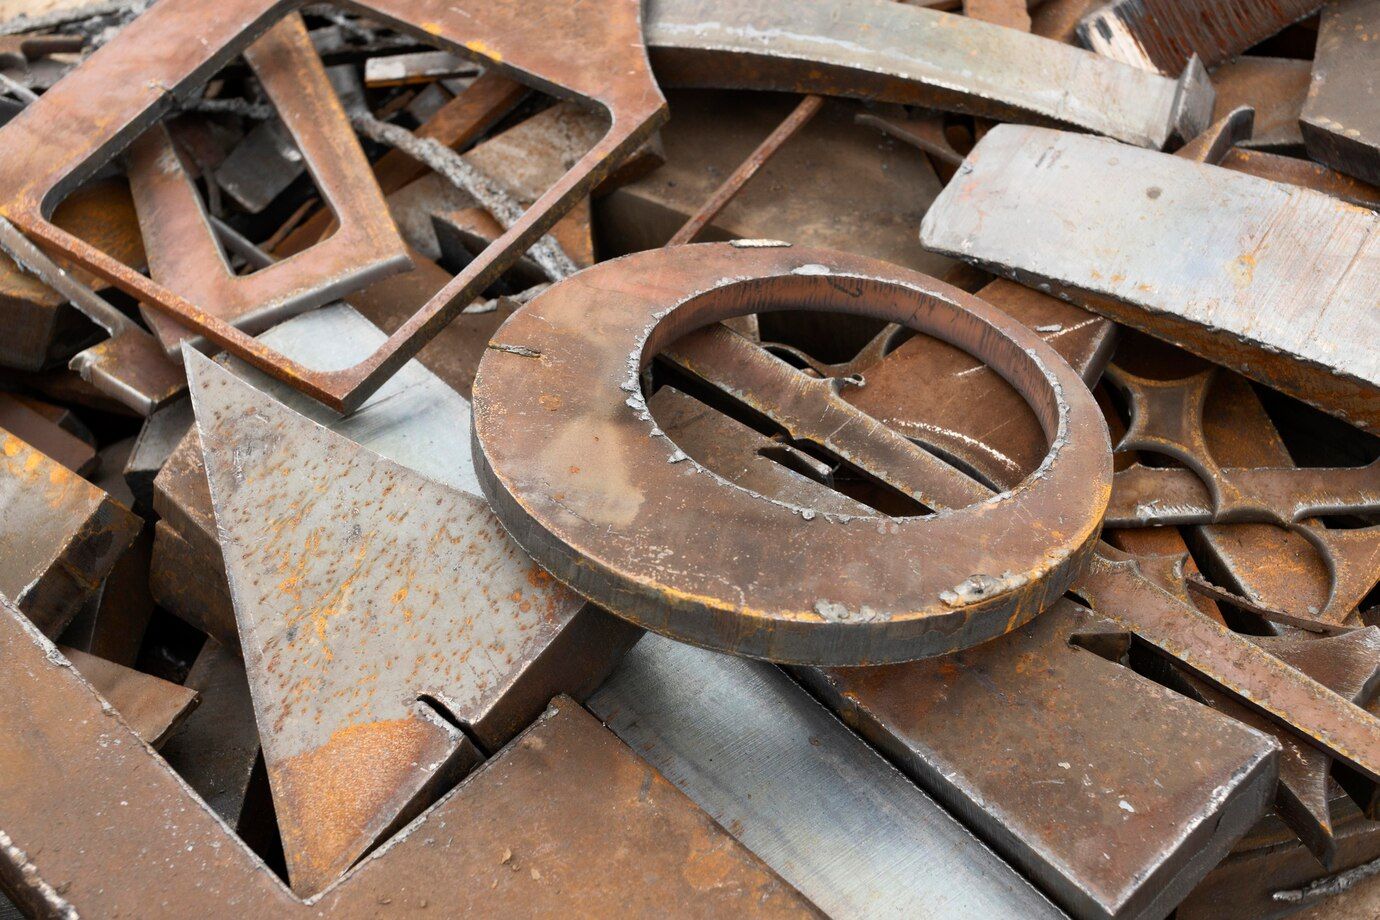 Scrap Metal Recycling Services